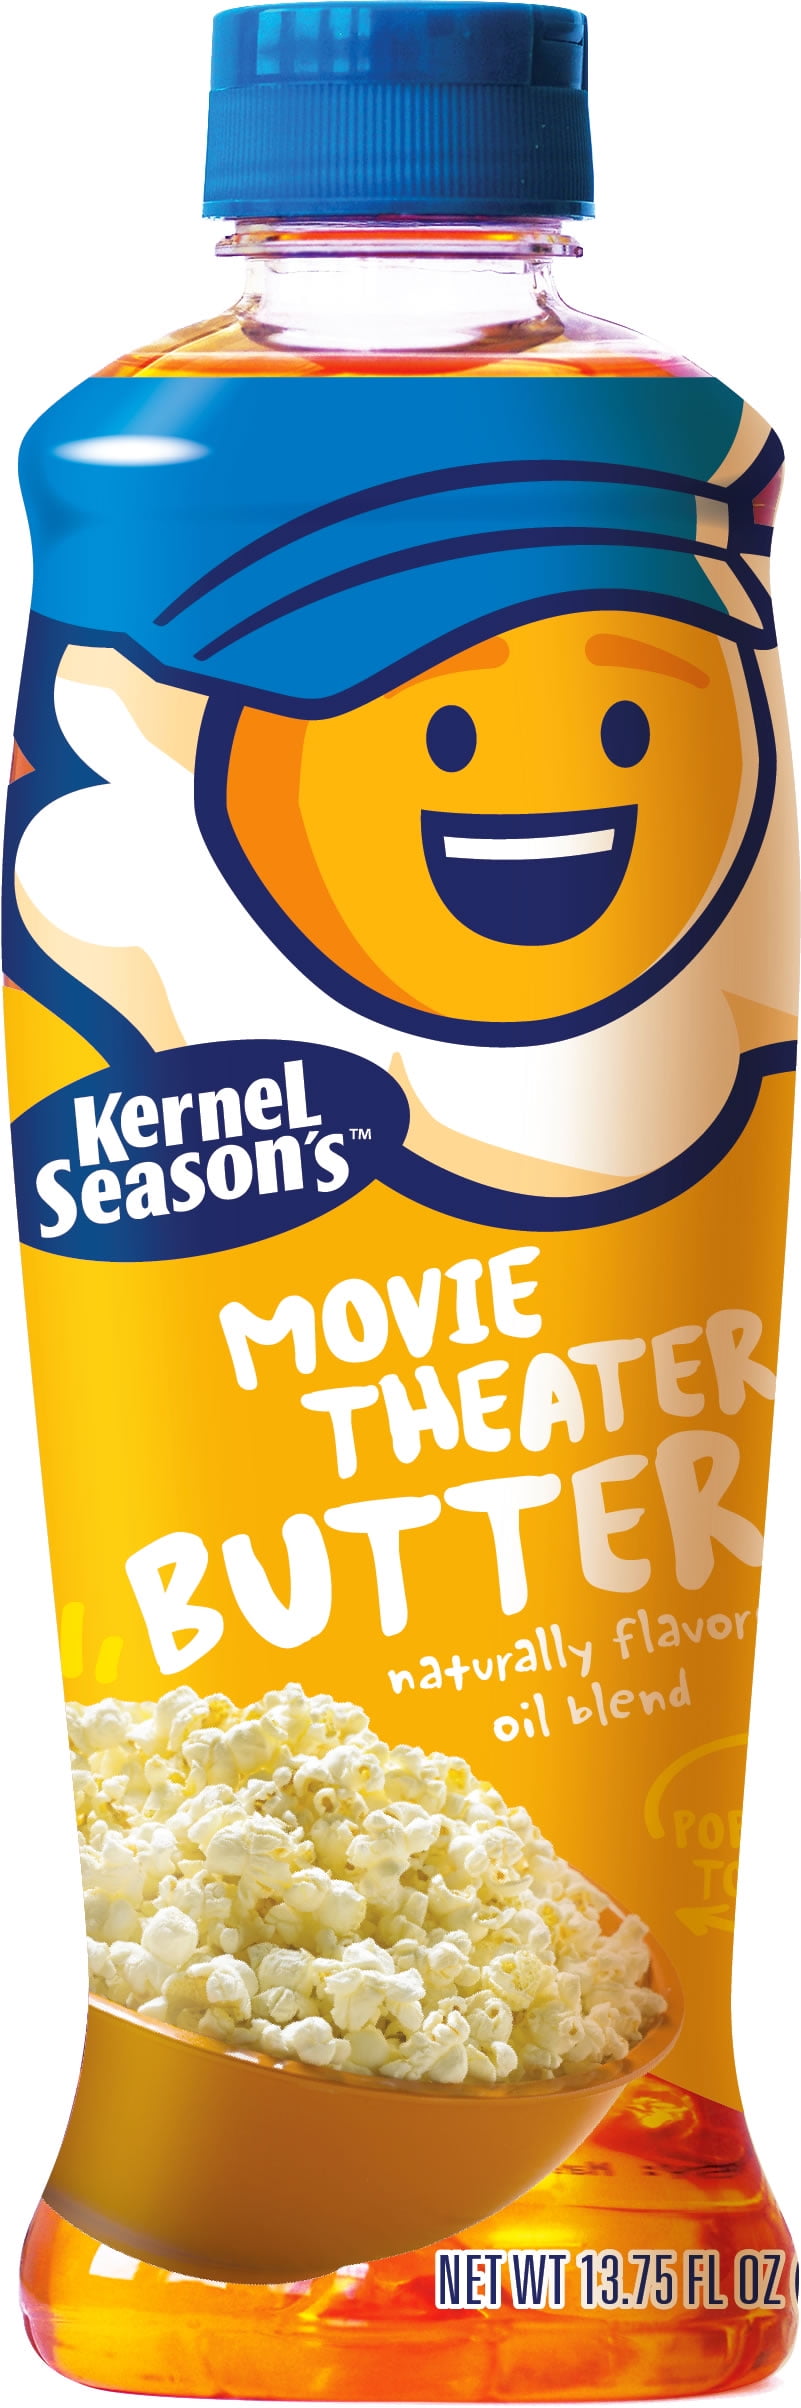 Kernel Season's Movie Theater Butter, 13.75 Fl. Oz.